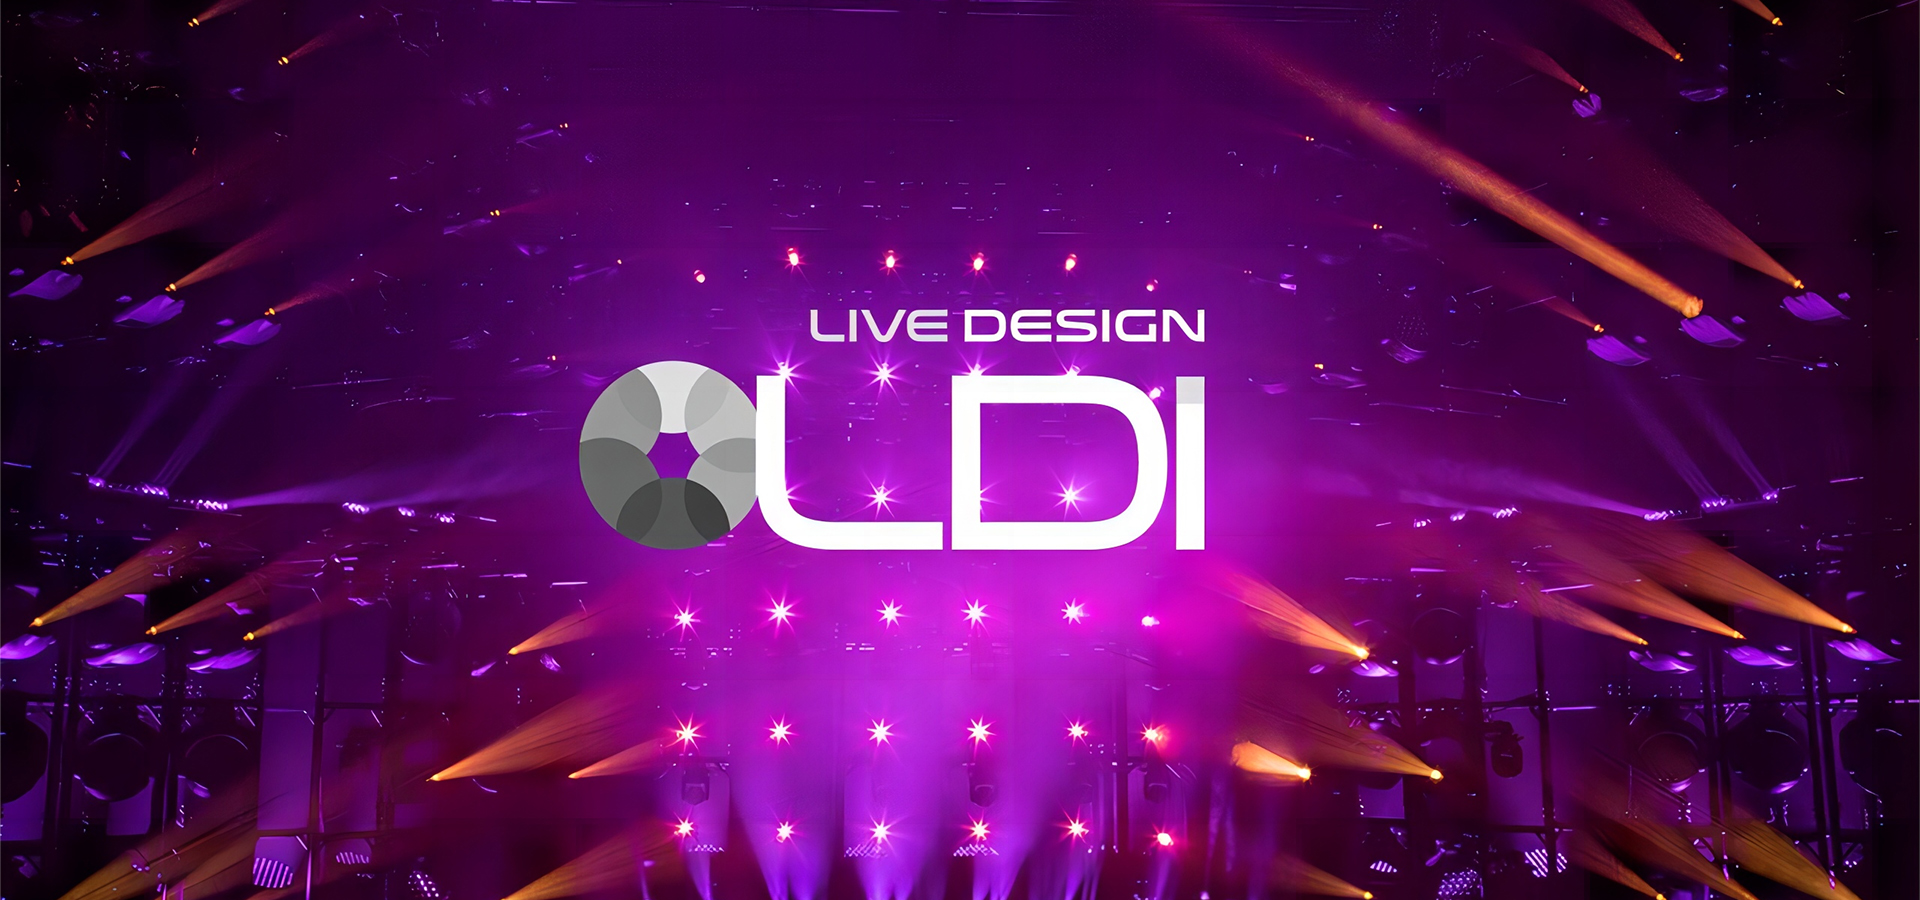 LDI (Live Design International) is coming soon